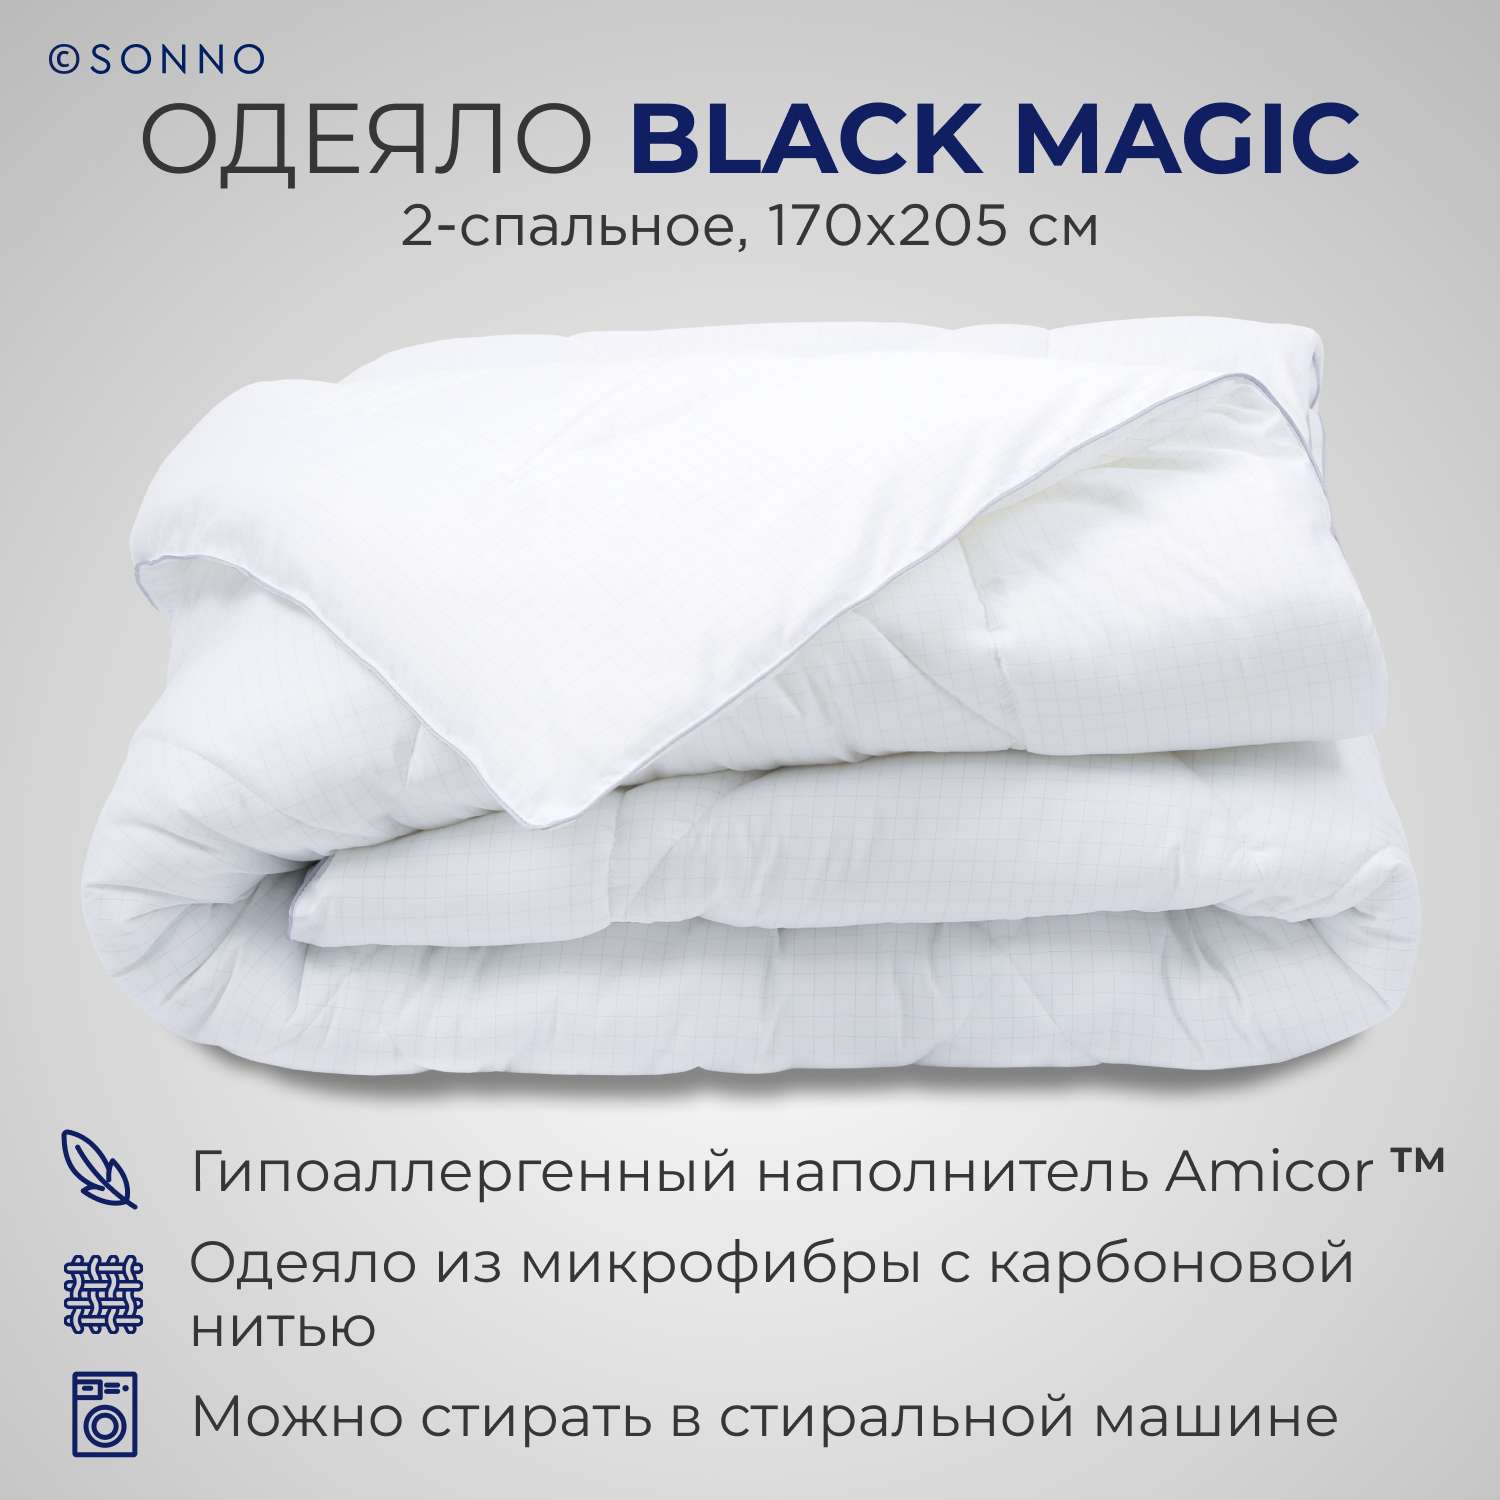 Одеяло SONNO BLACK MAGIC 2-х спальный 170x205 наполнитель Amicor TM - фото 1